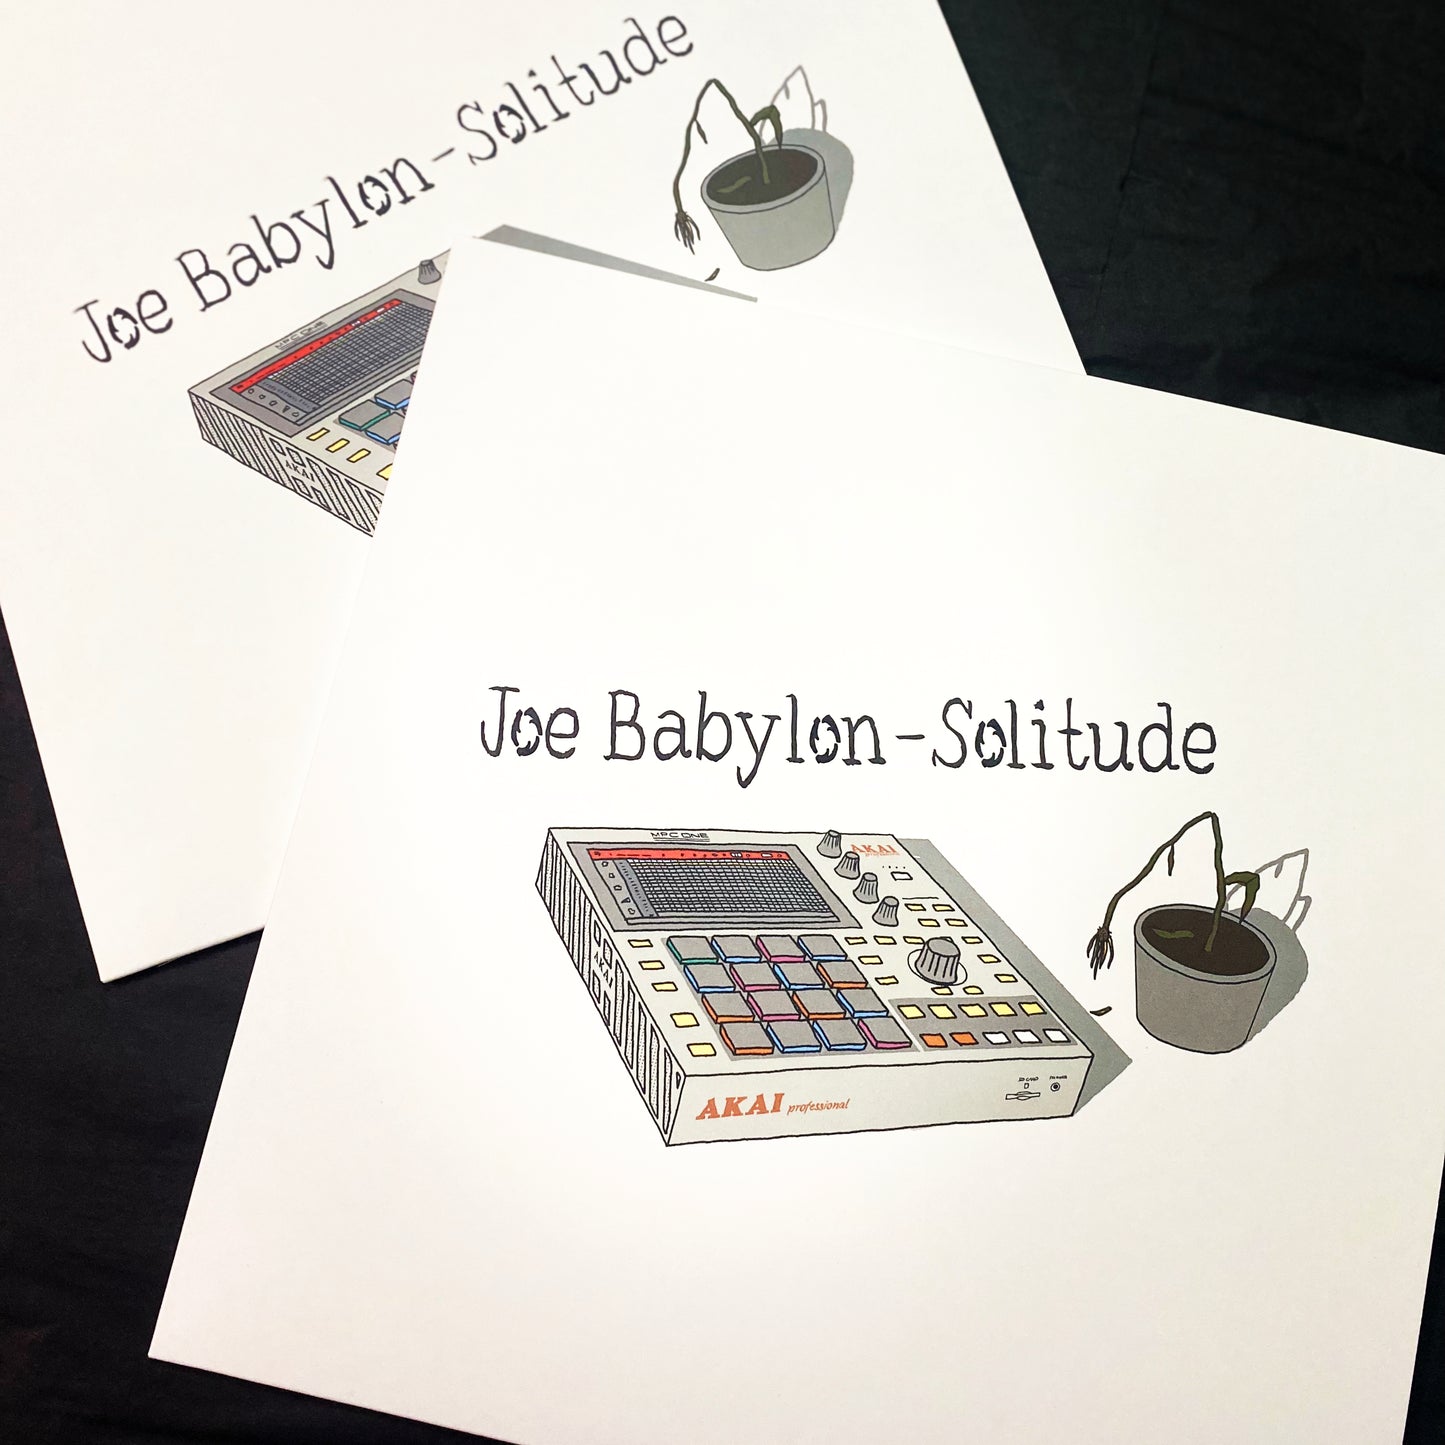 Joe Babylon – Solitude